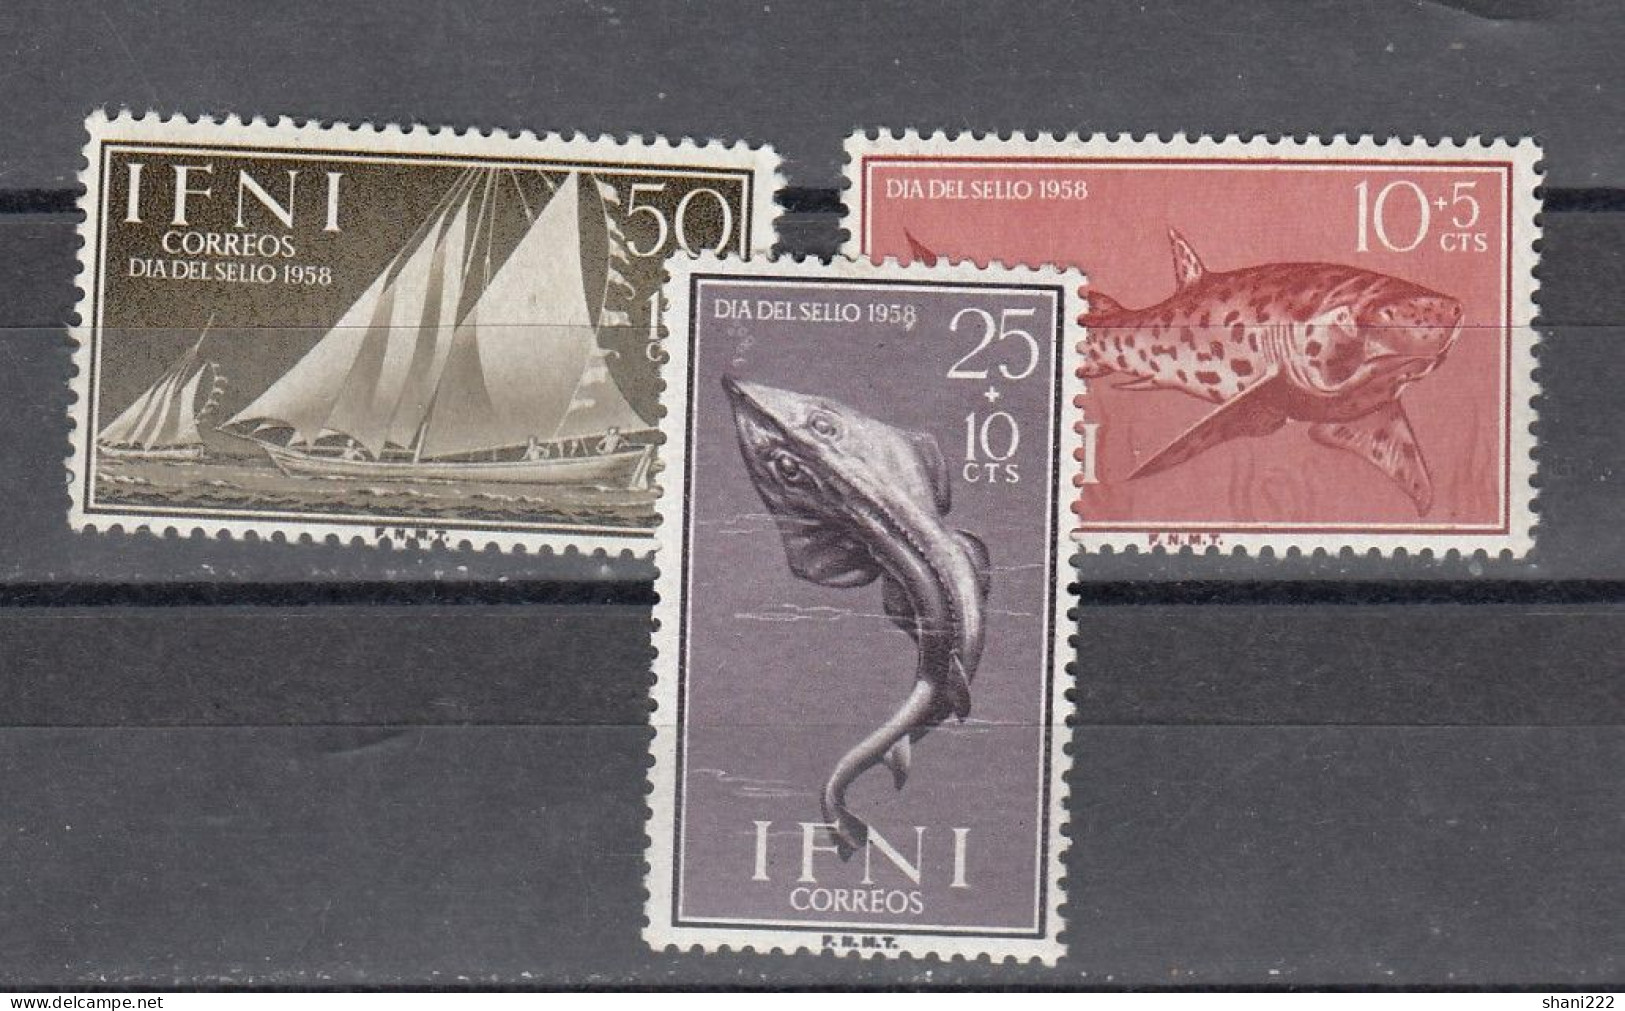 Ifni - 1958 Fishes - MNH Set (e-826) - Ifni